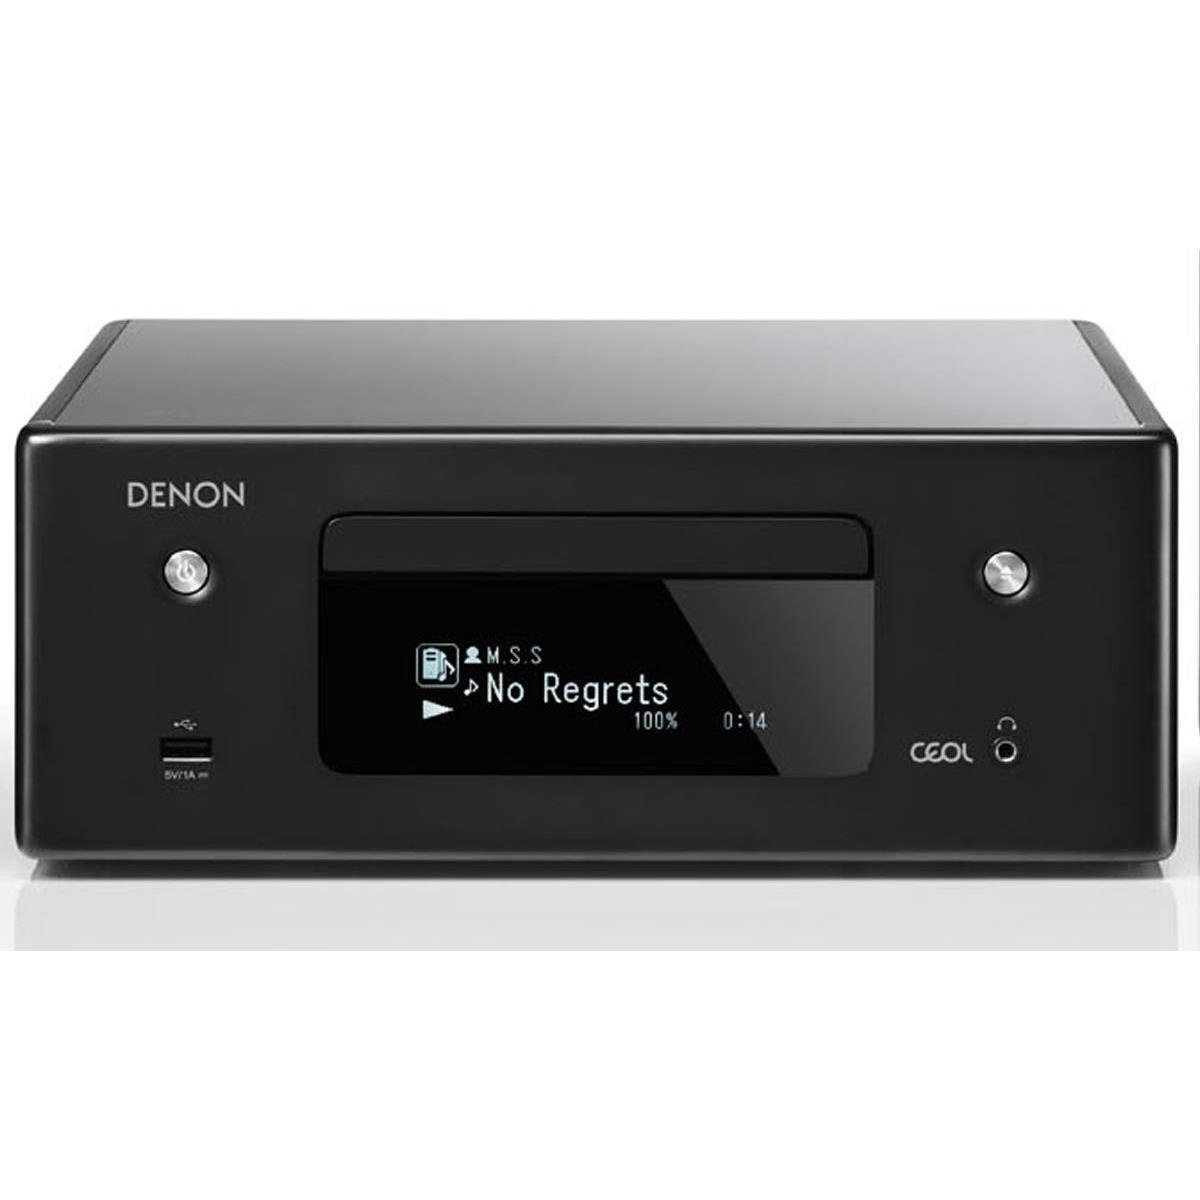 

Denon RCD-N10 Hi-Fi Network CD Receiver with HEOS Music Streaming, 55W